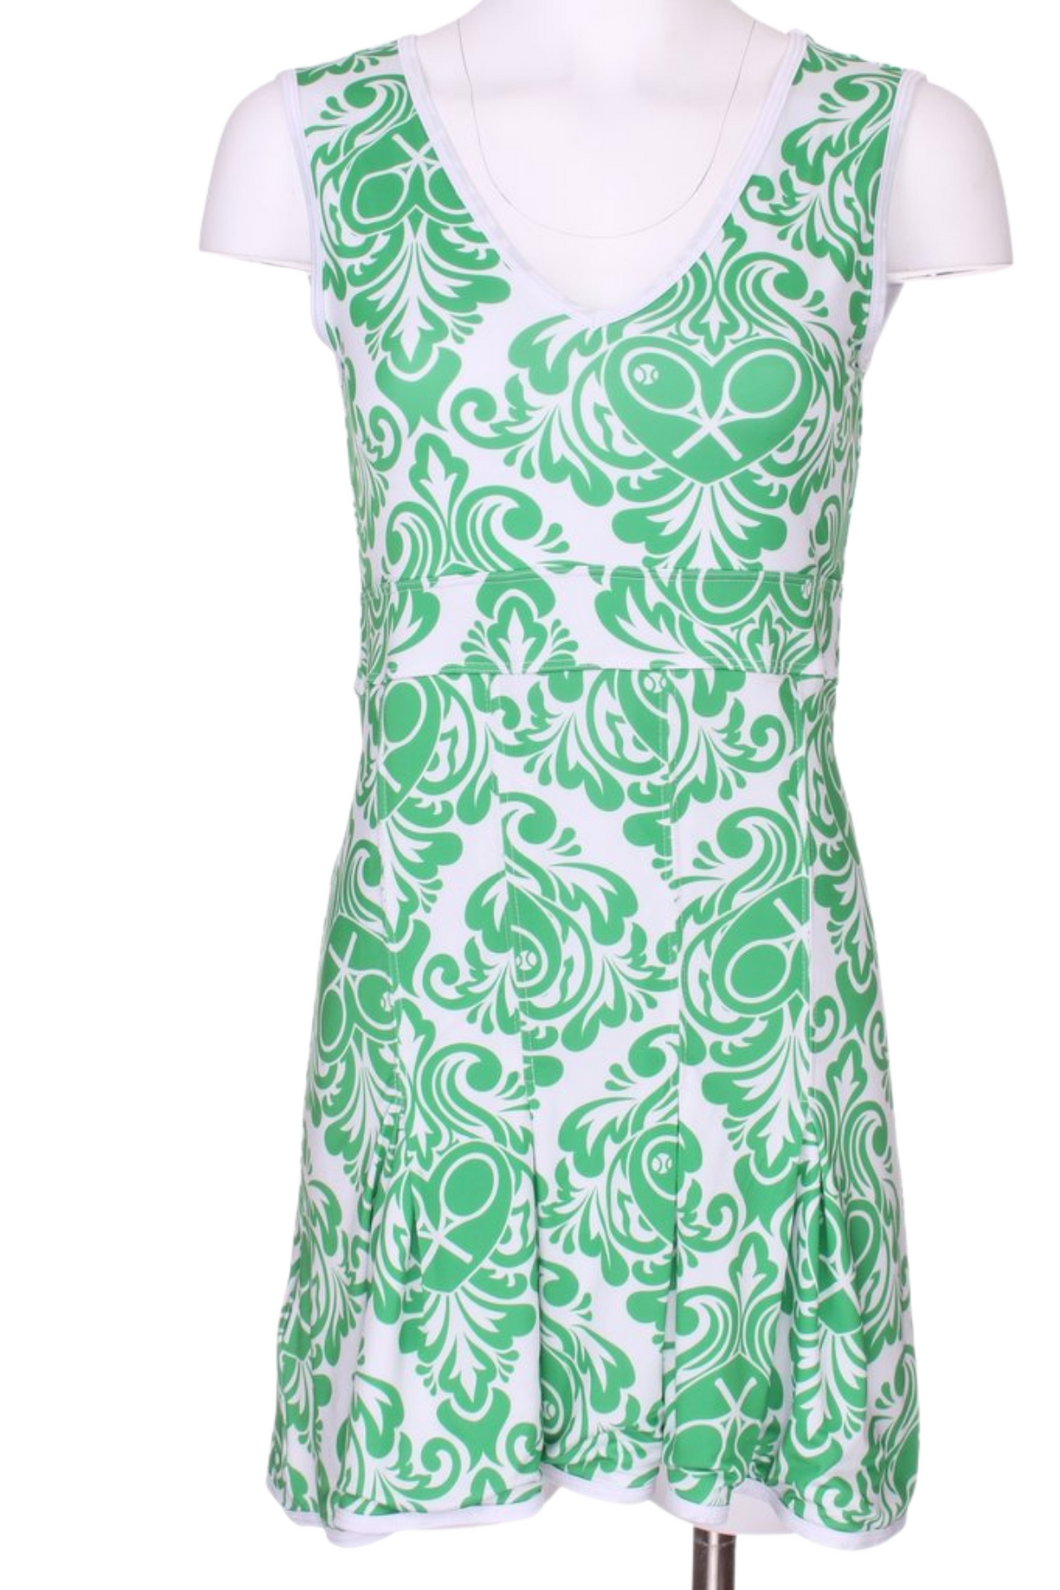 Damask + Green on White Angelina Tennis Dress - I LOVE MY DOUBLES PARTNER!!!